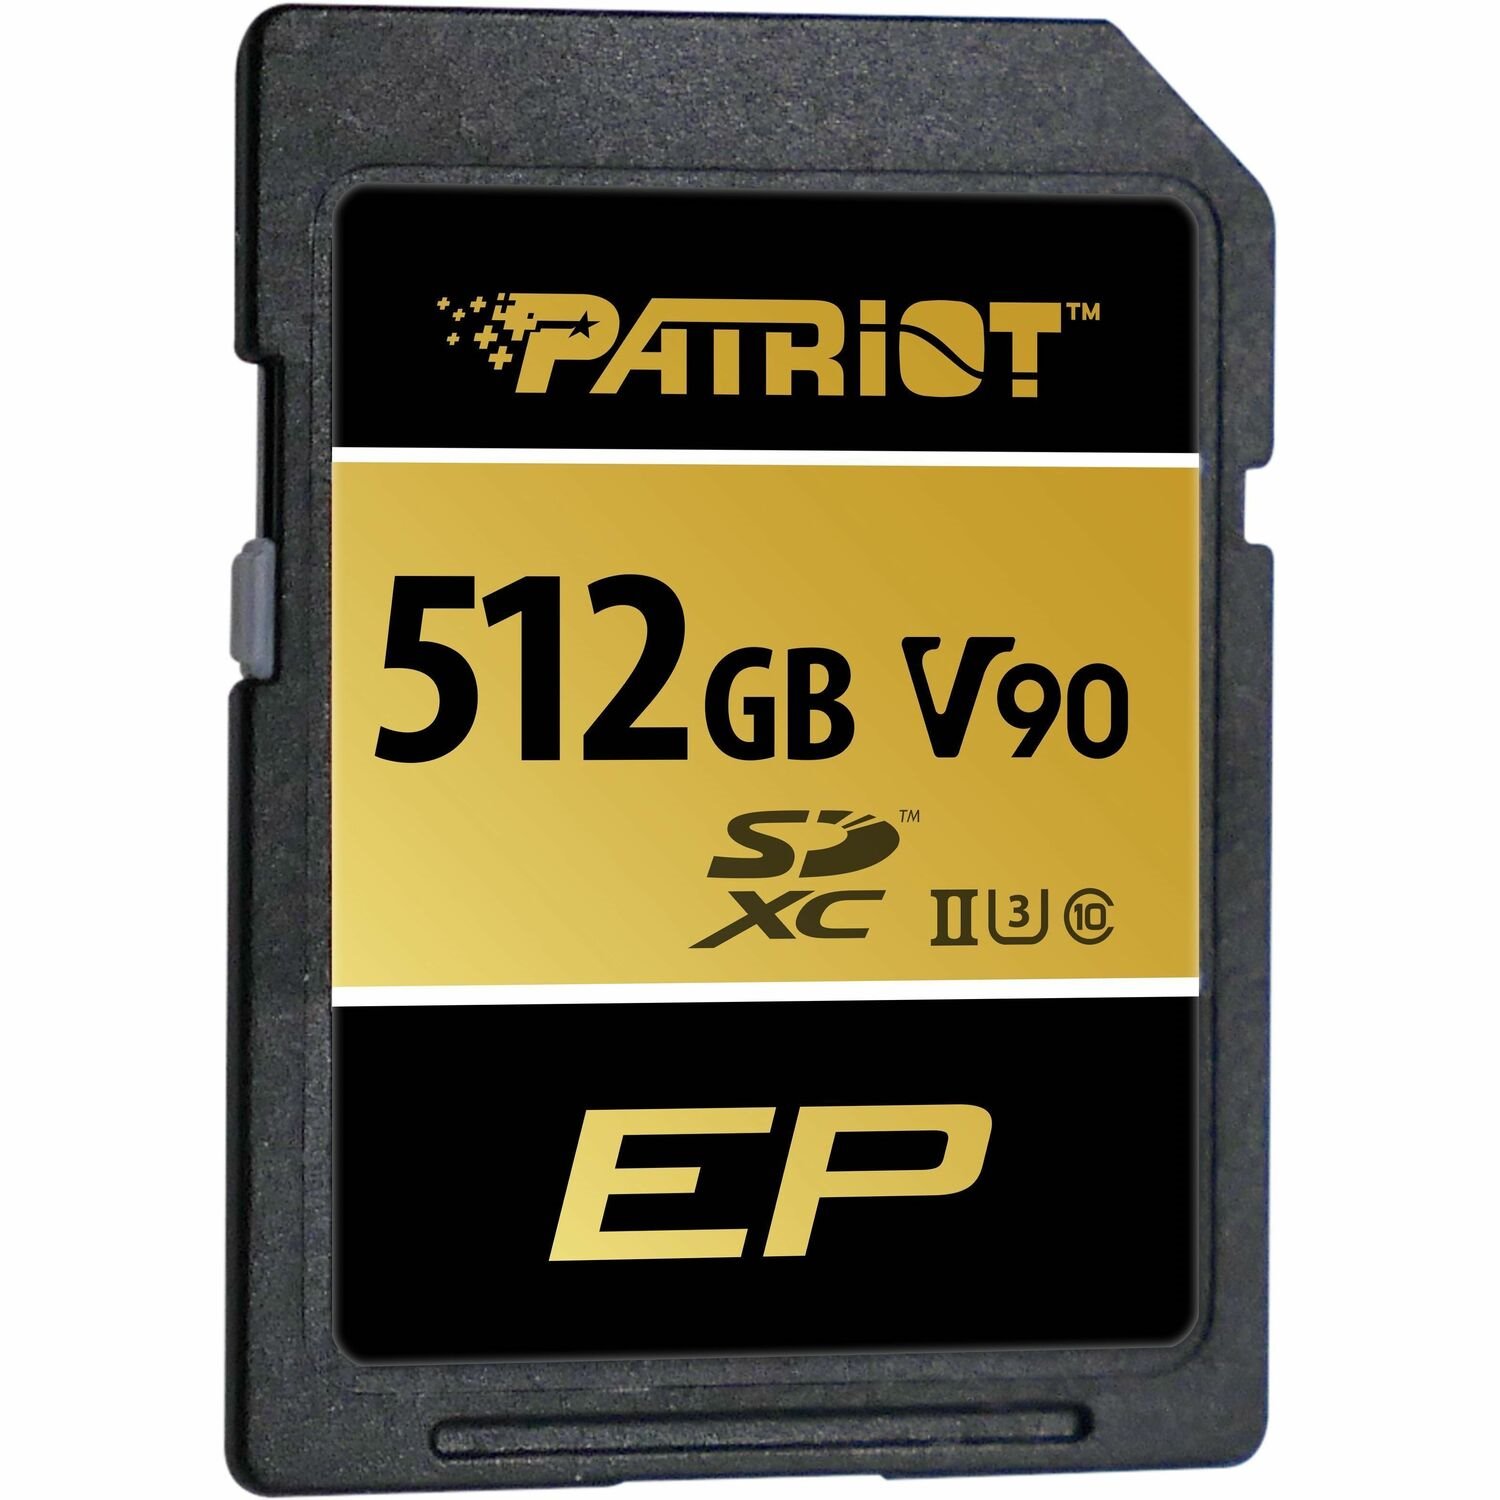 Patriot Memory 512 GB Class 10/UHS-II (U3) V90 SDXC - 1 Pack